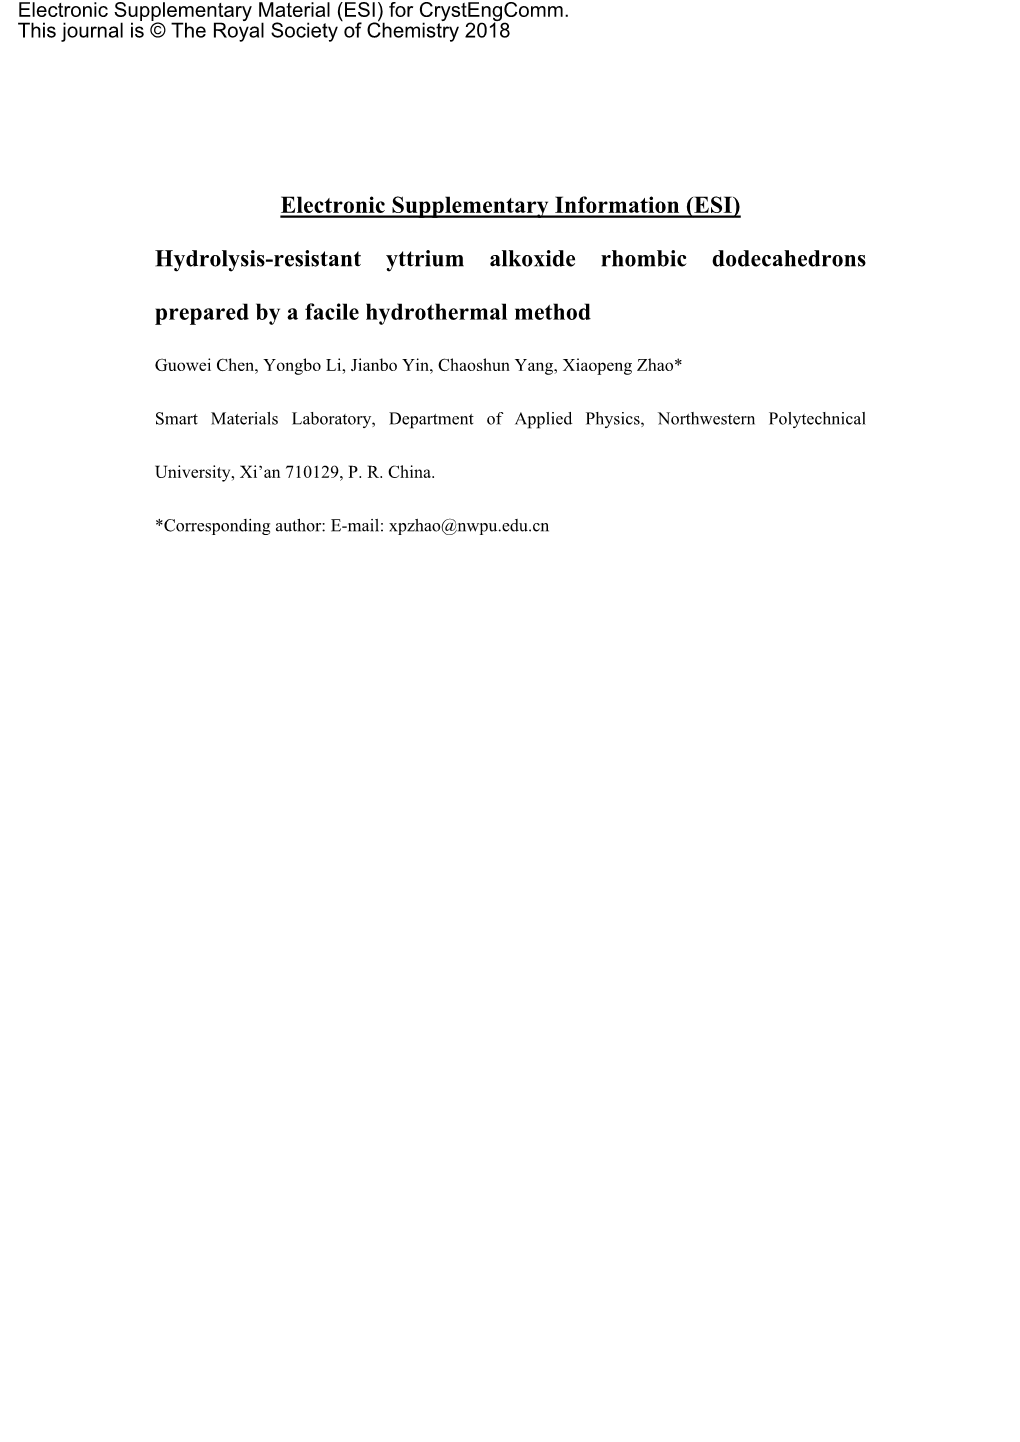 Electronic Supplementary Information (ESI) Hydrolysis-Resistant Yttrium